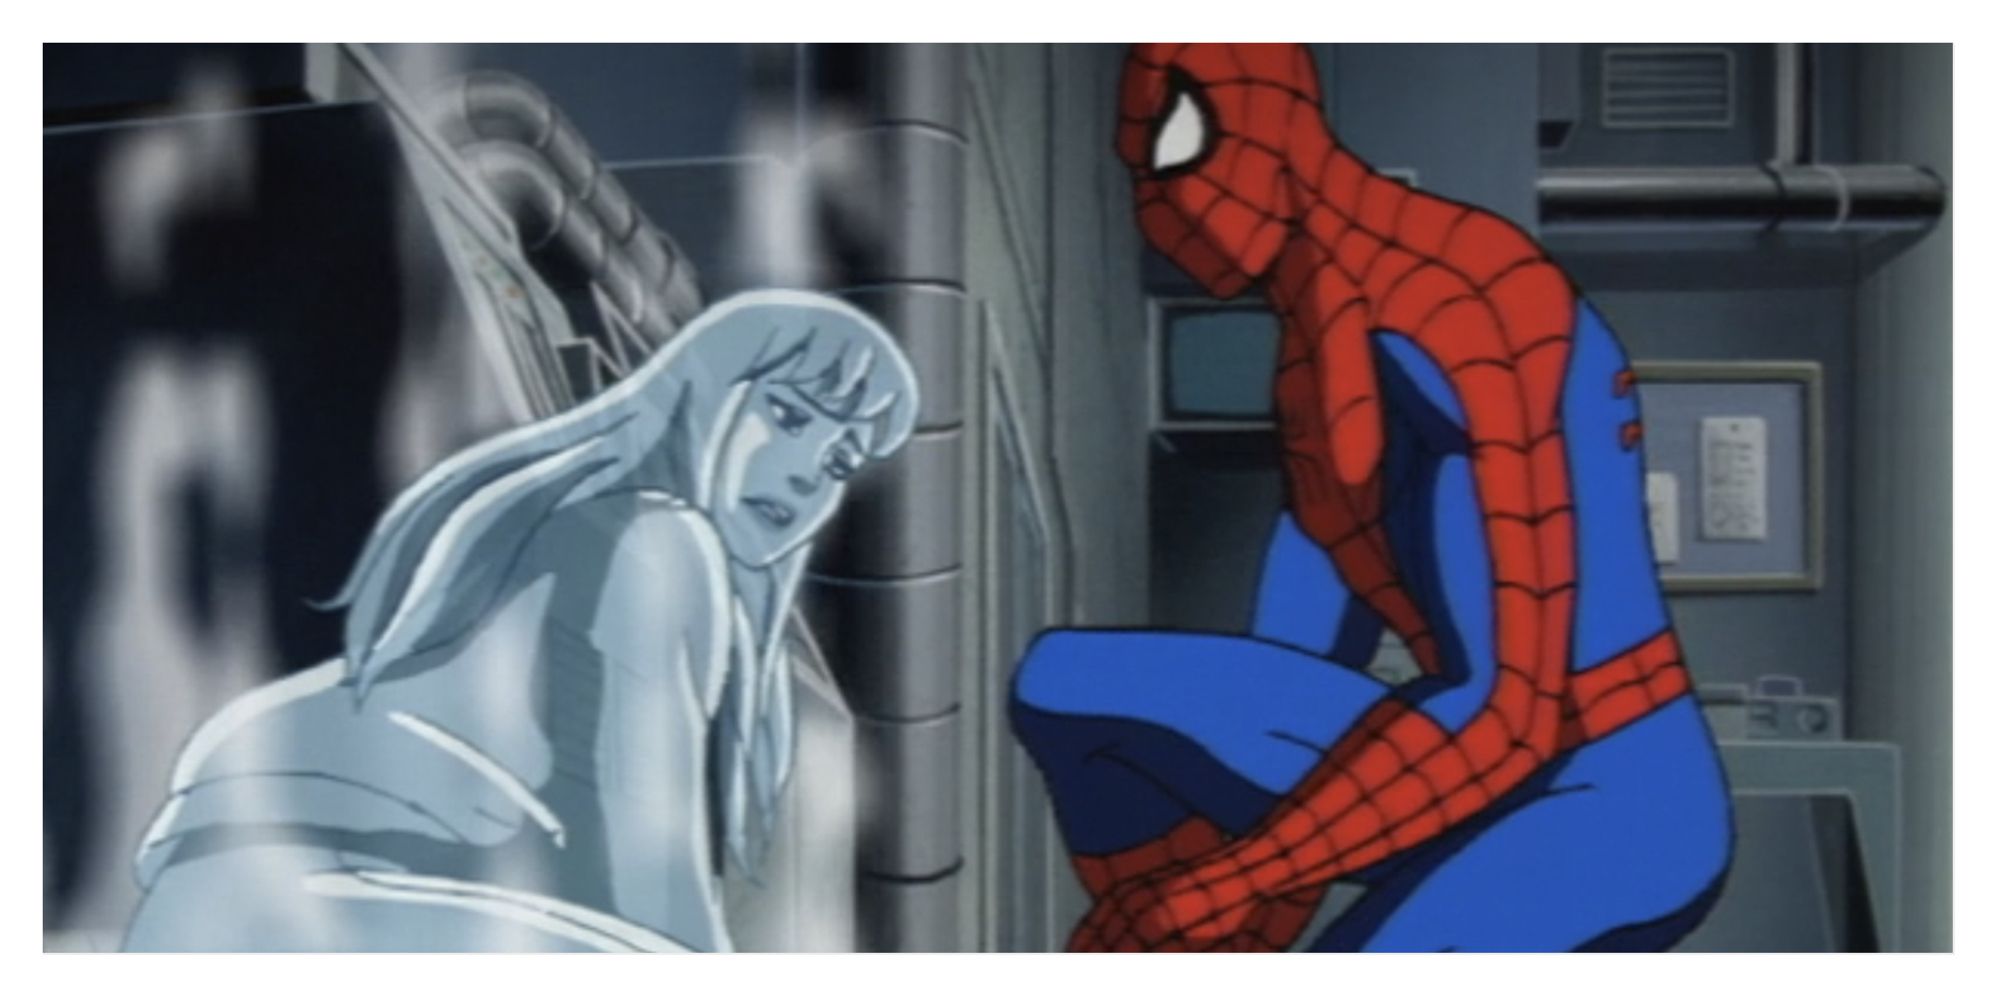 Spider-Man saying goodbye to MJ again